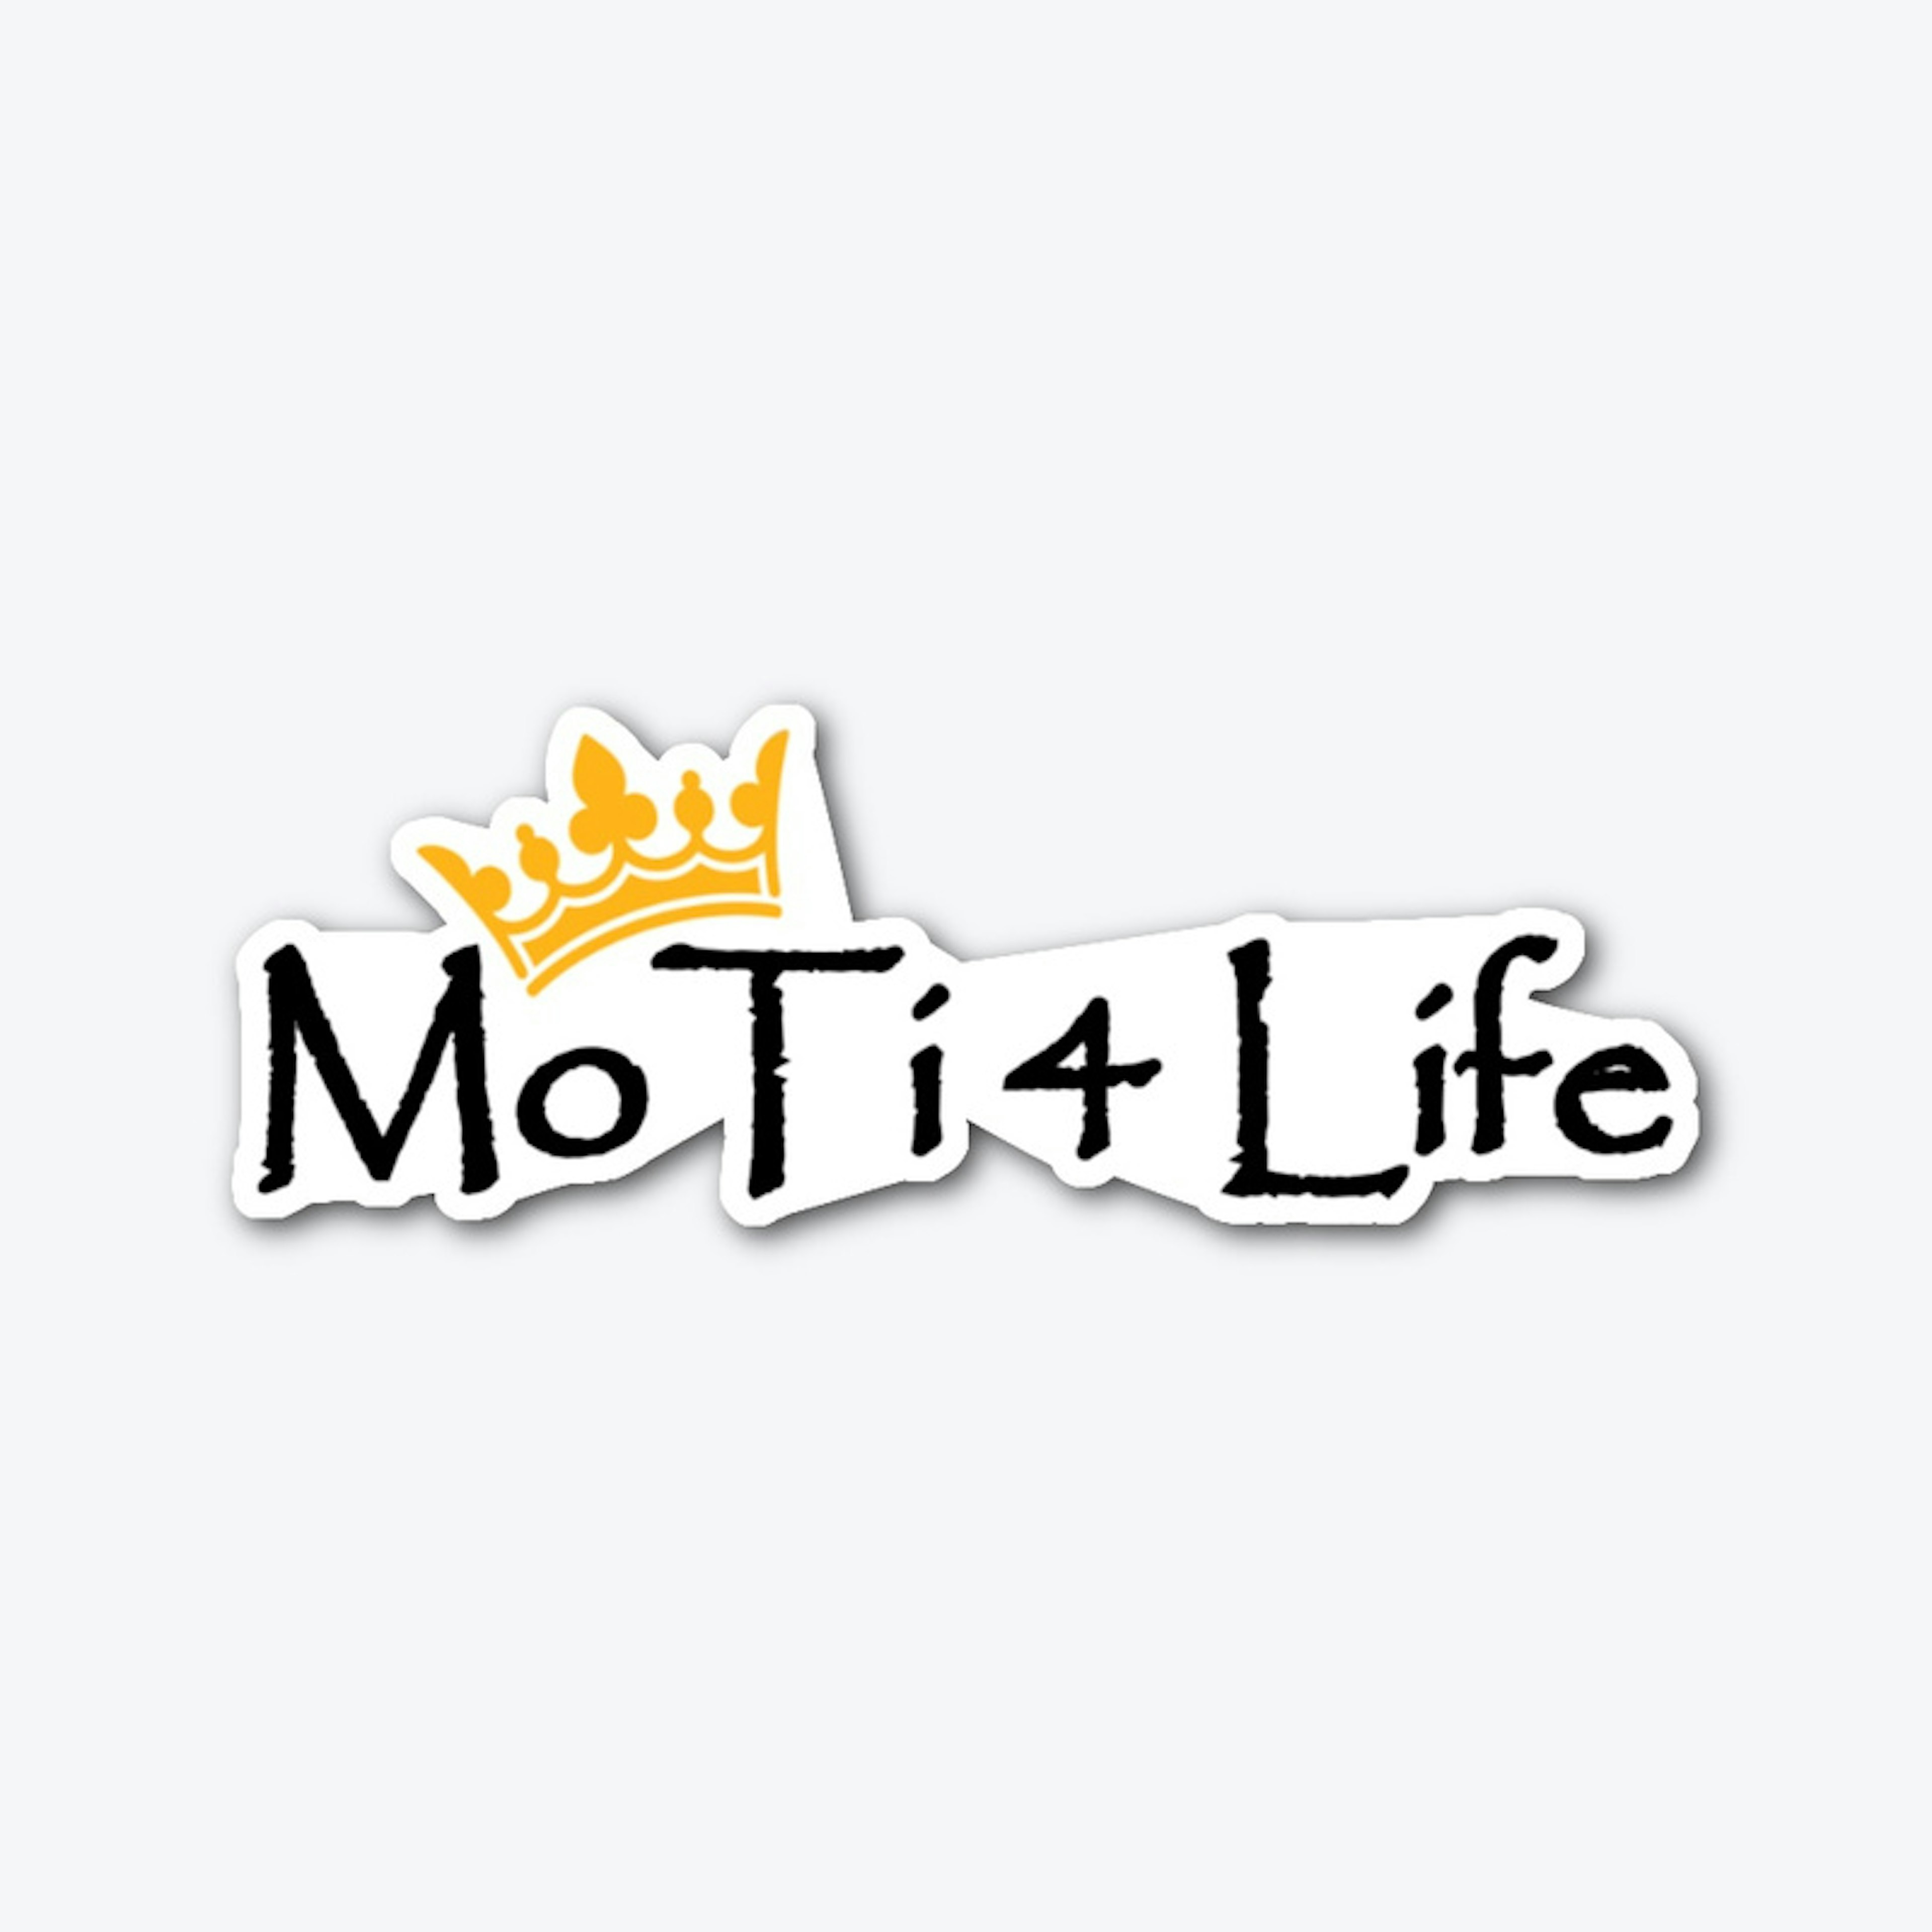 MoTi4Life Stickers